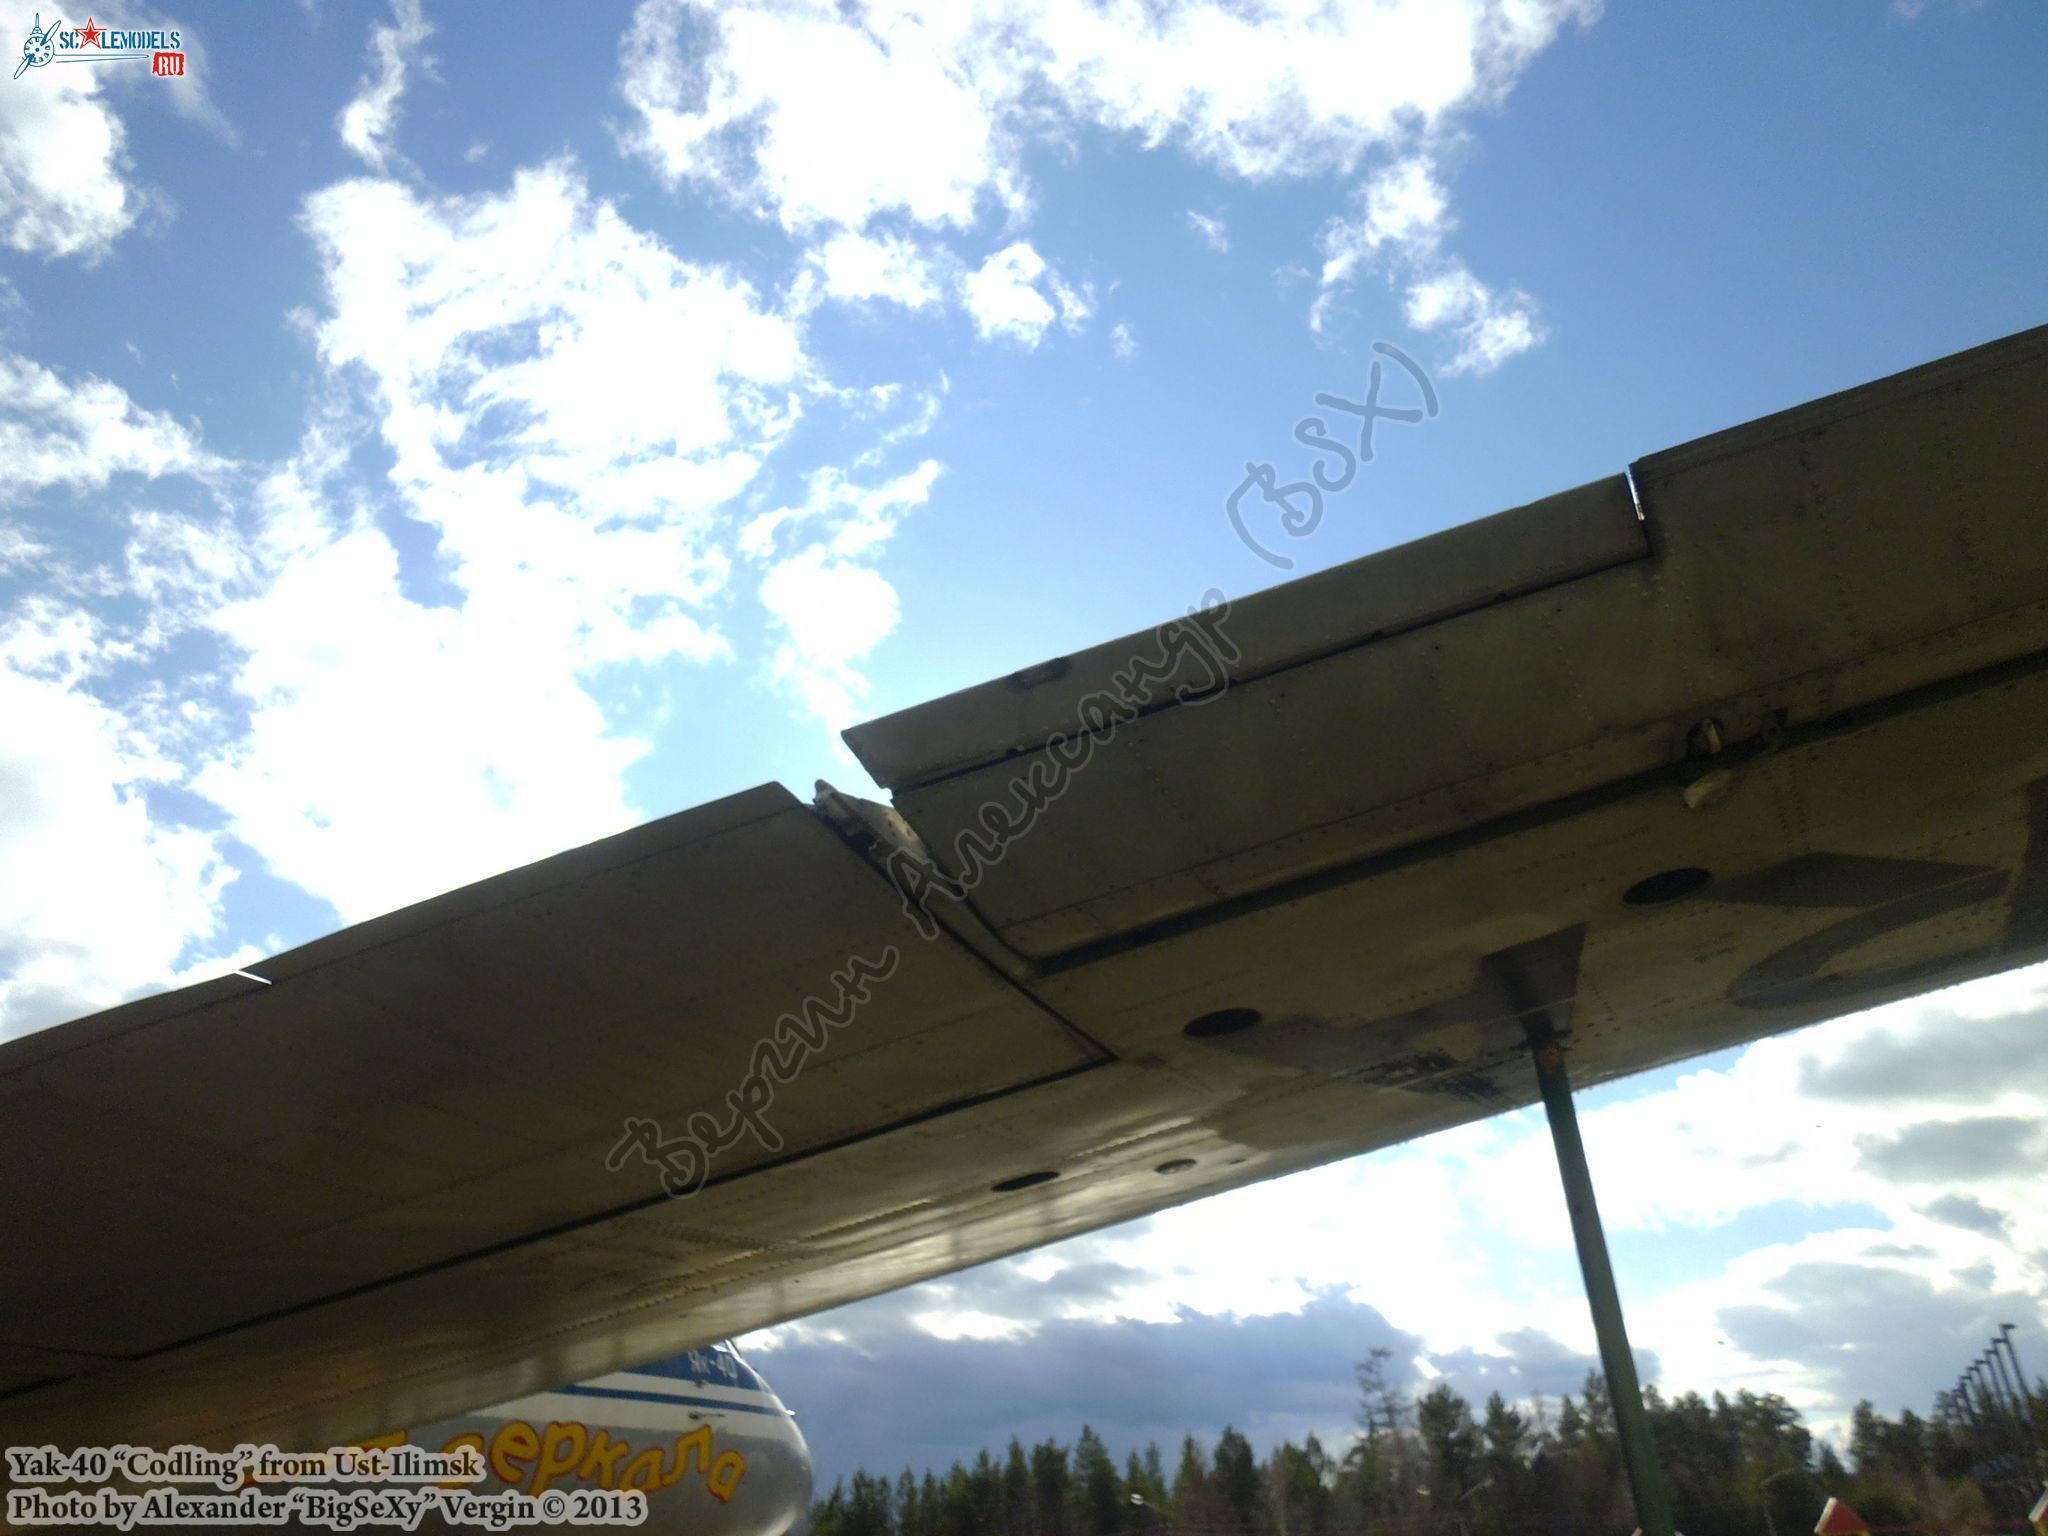 Yak-40 (RA-87339)_Ust-Ilimsk_108